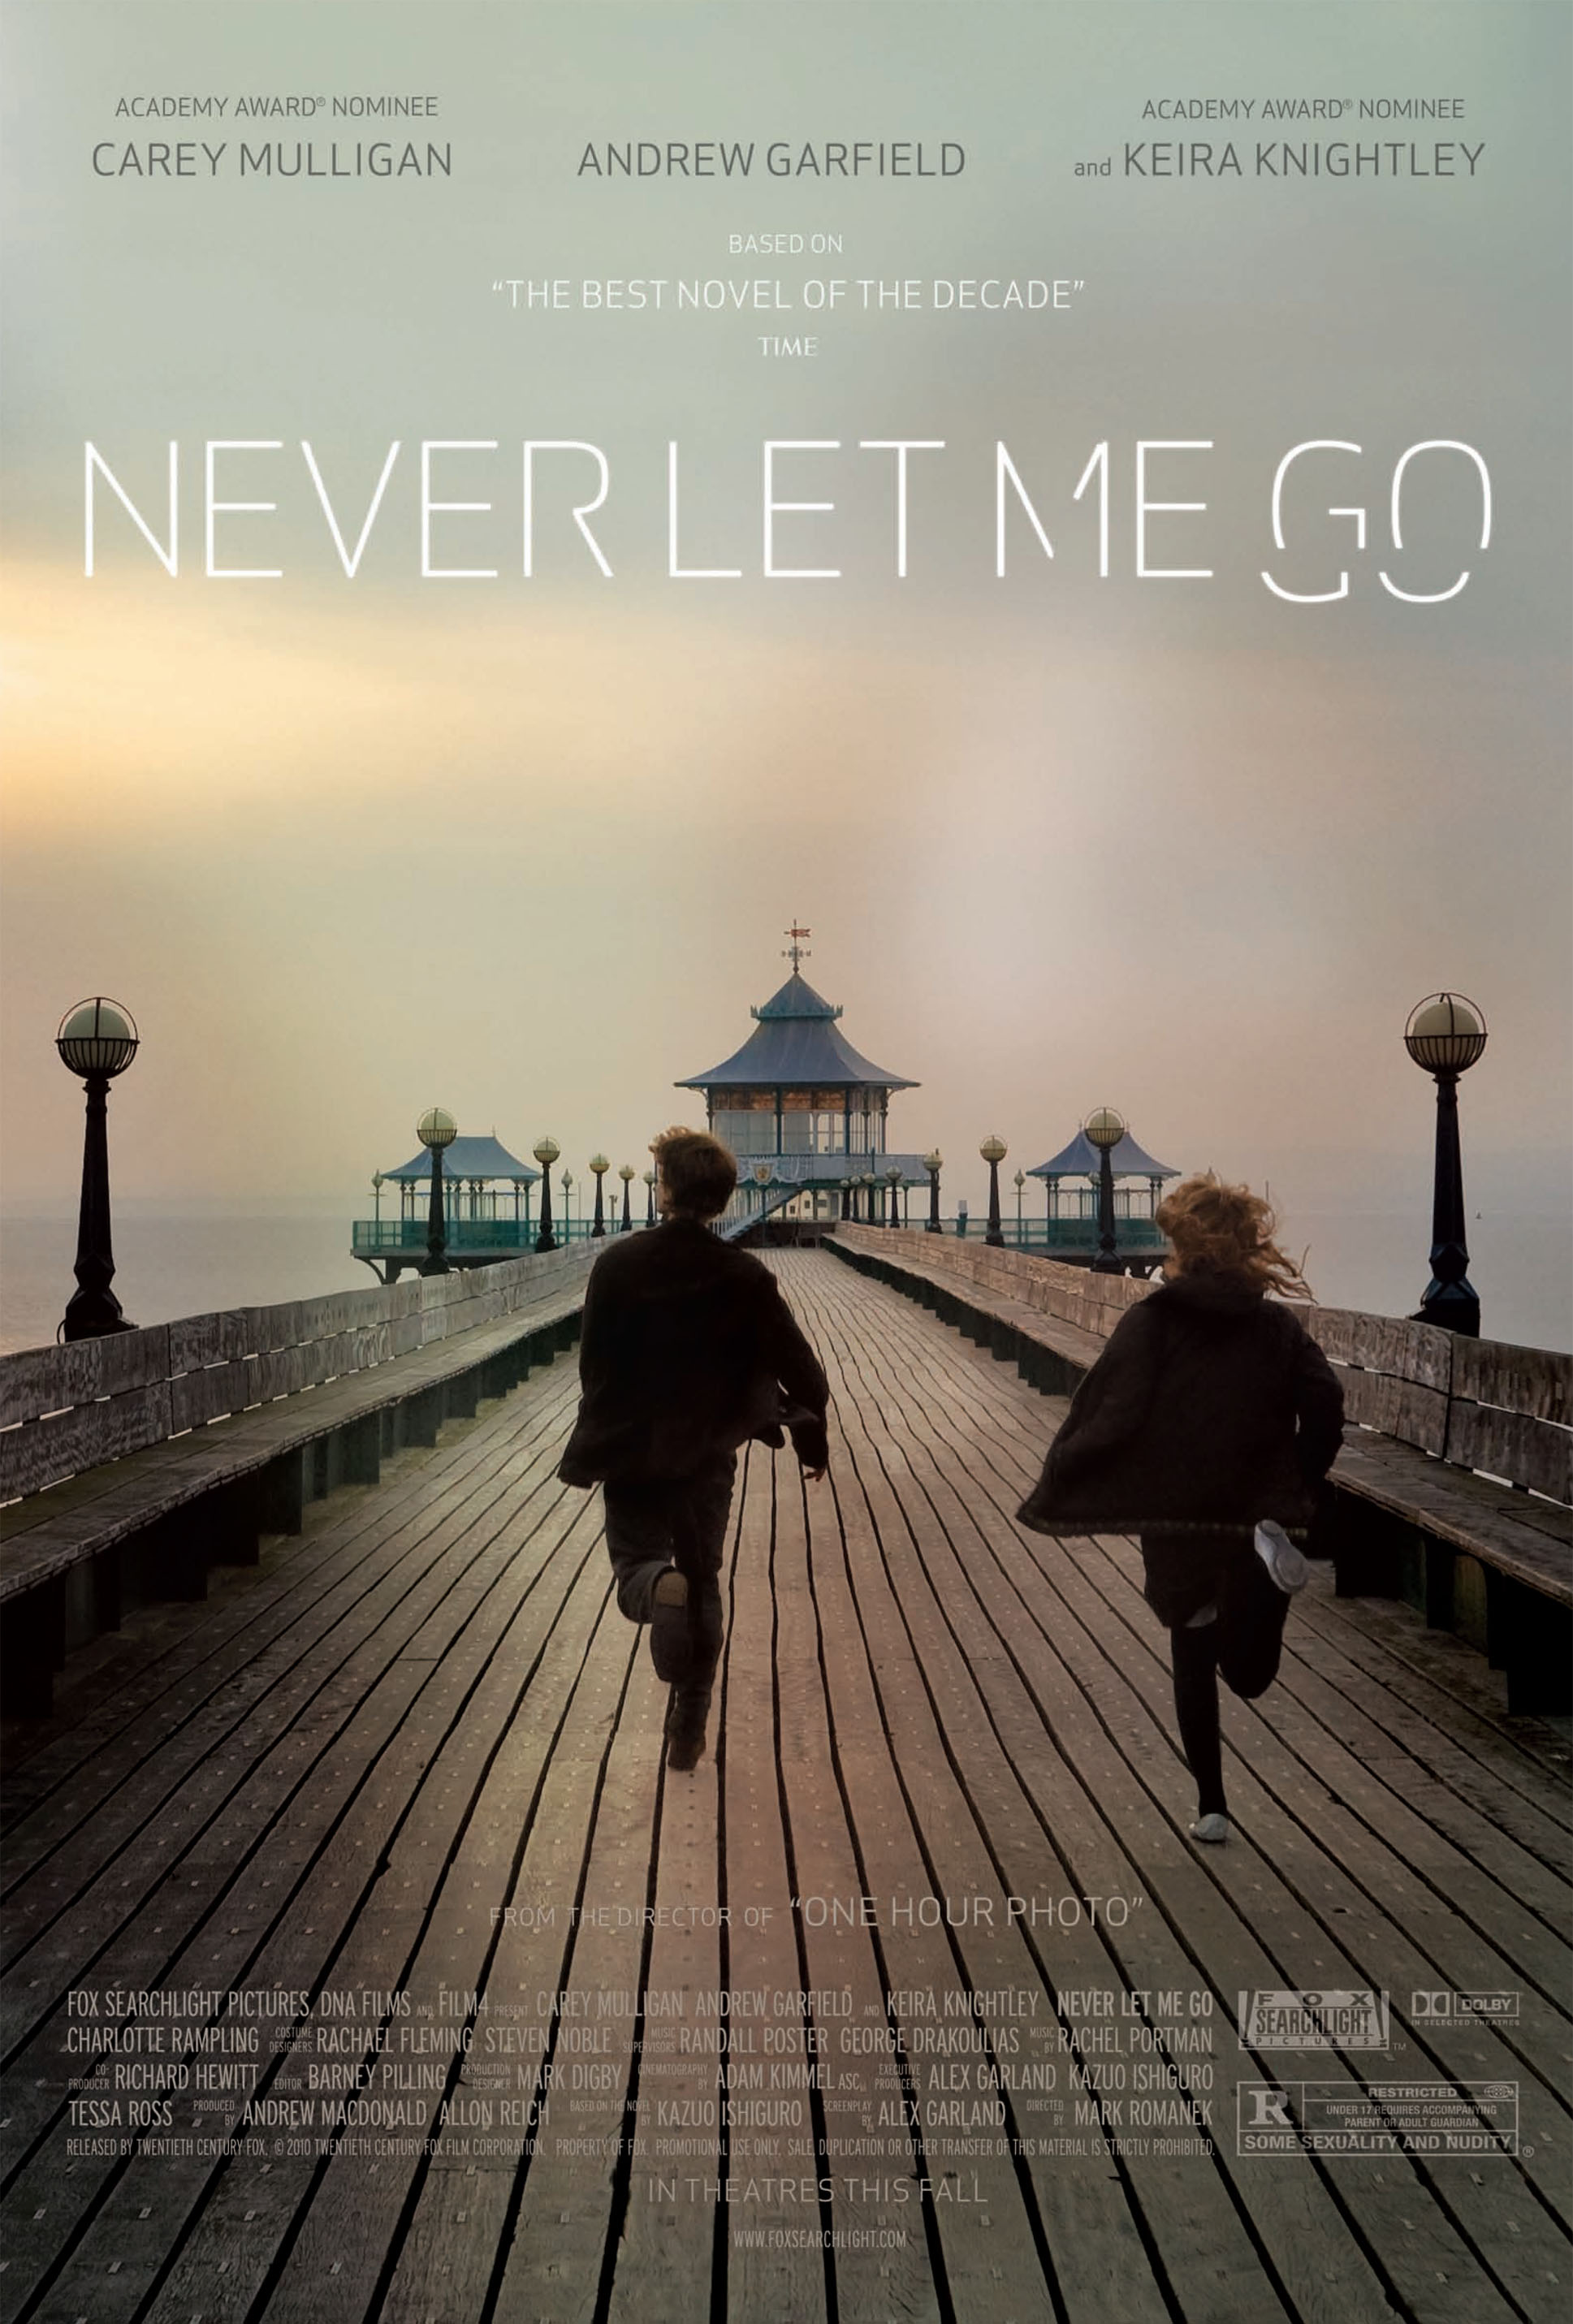 Never-Let-Me-Go-movie-poster-1.jpg